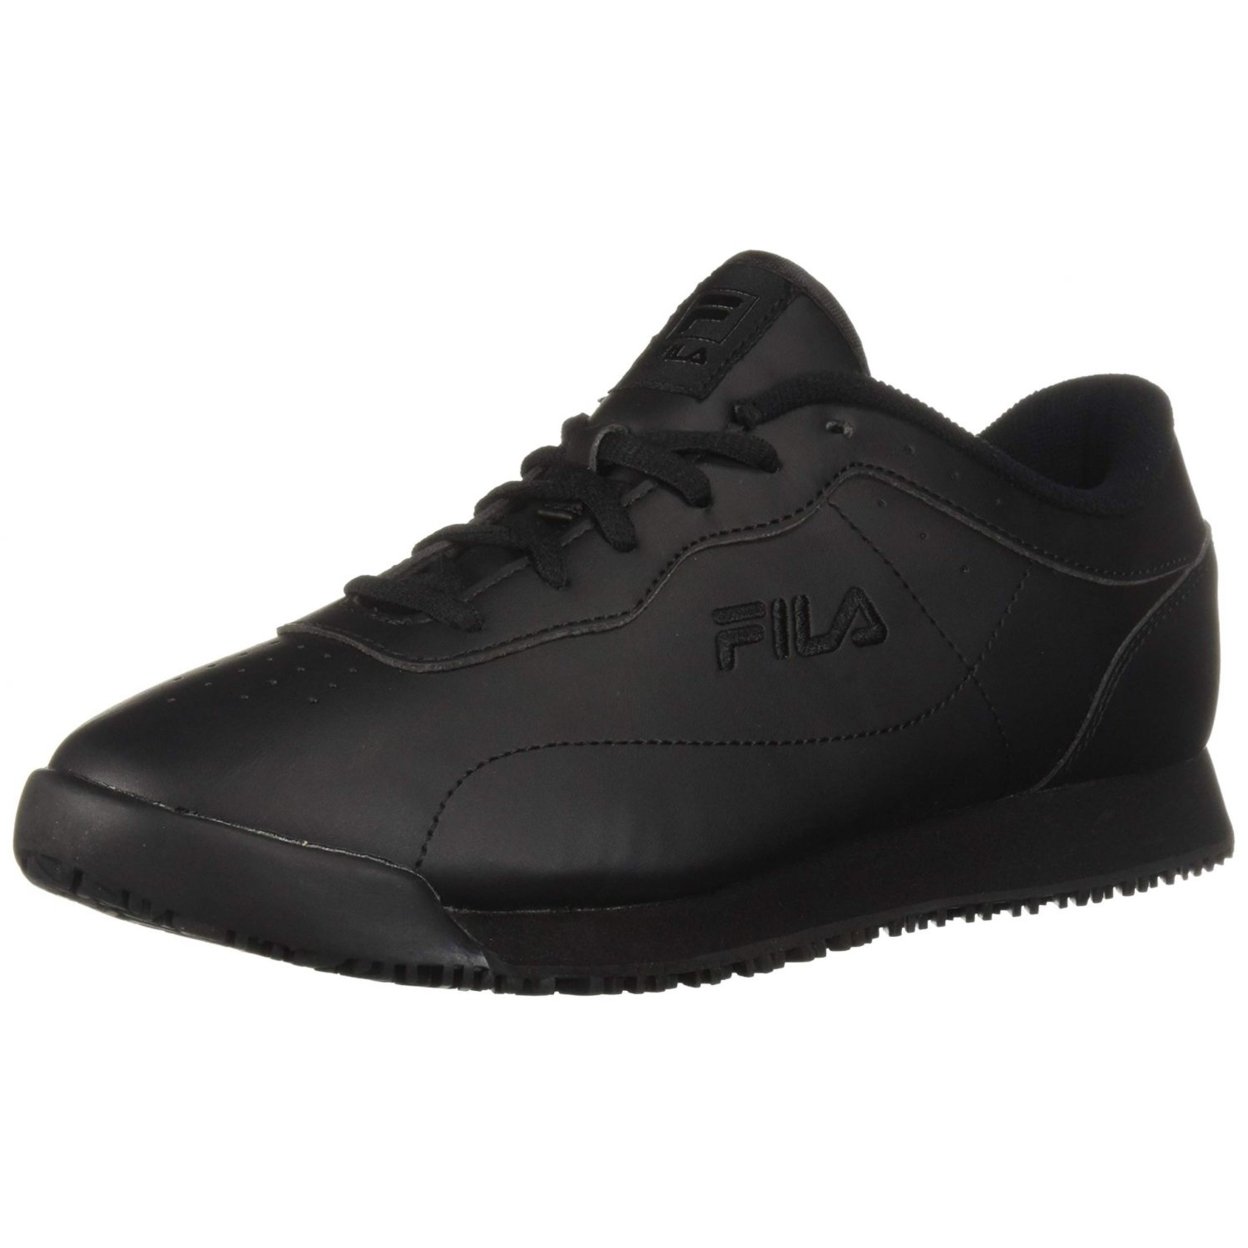 Fila Memory Viable Sr Wide Womens Shoes Size 10, Color: Black 0 BLK/BLK/BLK - BLK/BLK/BLK, 5.5